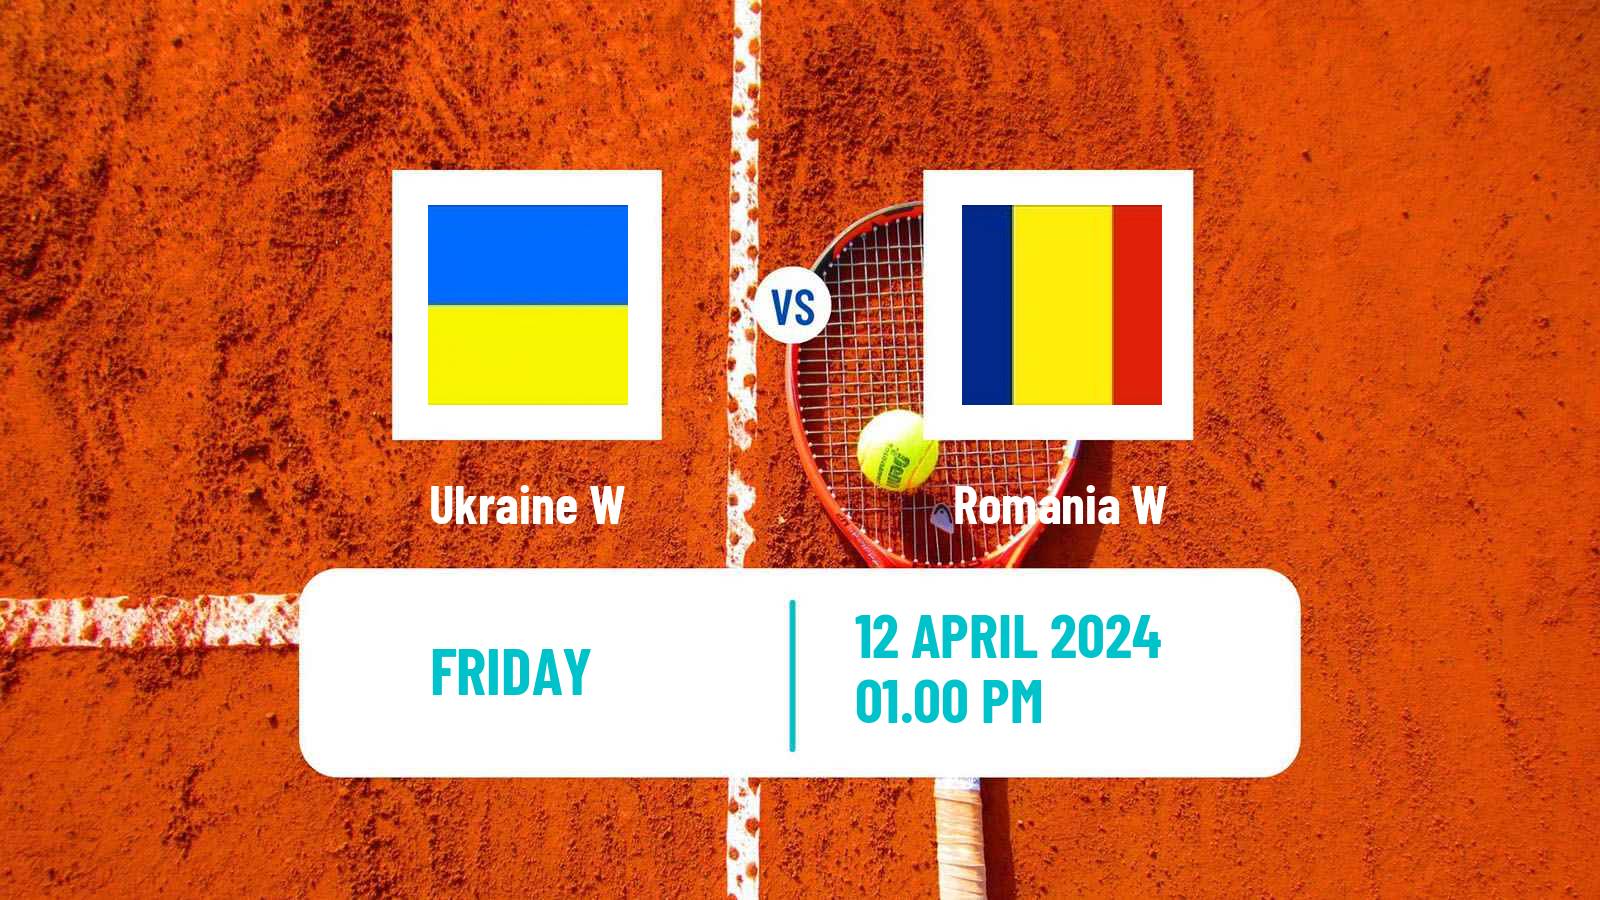 Tennis WTA Billie Jean King Cup World Group Teams Ukraine W - Romania W